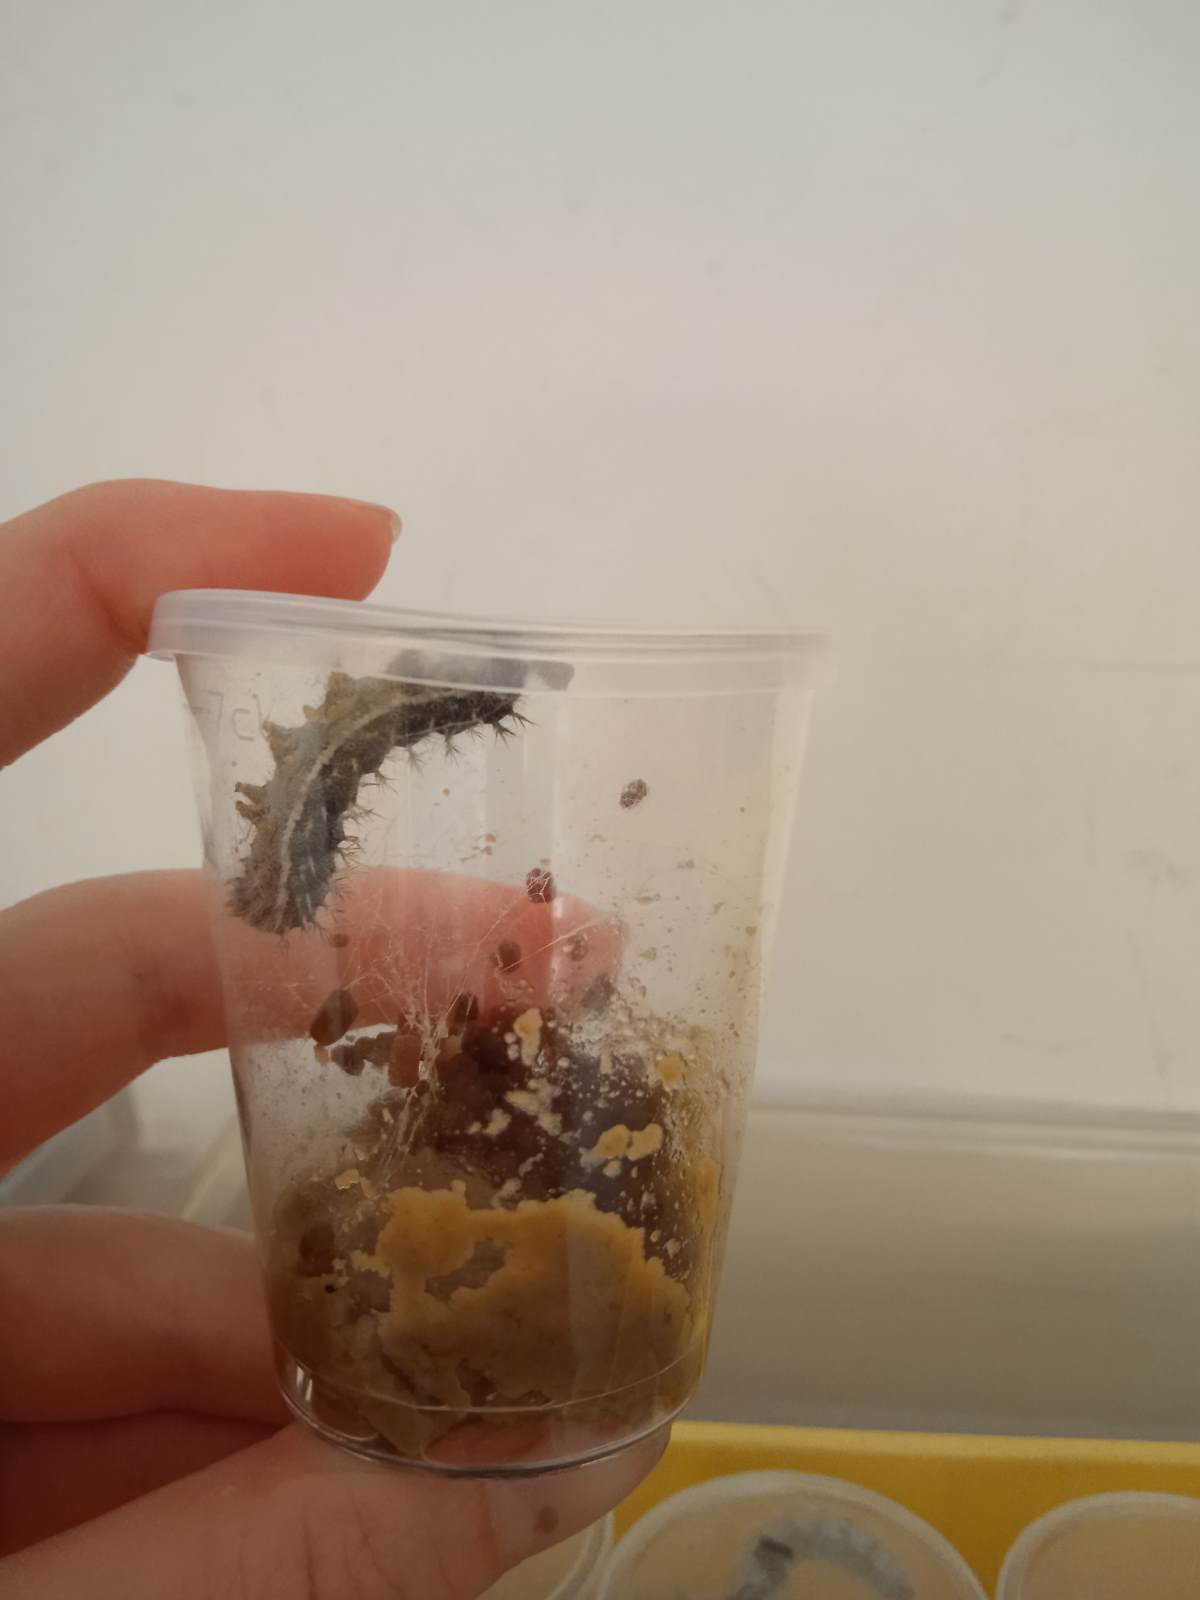 Caterpillar in pot